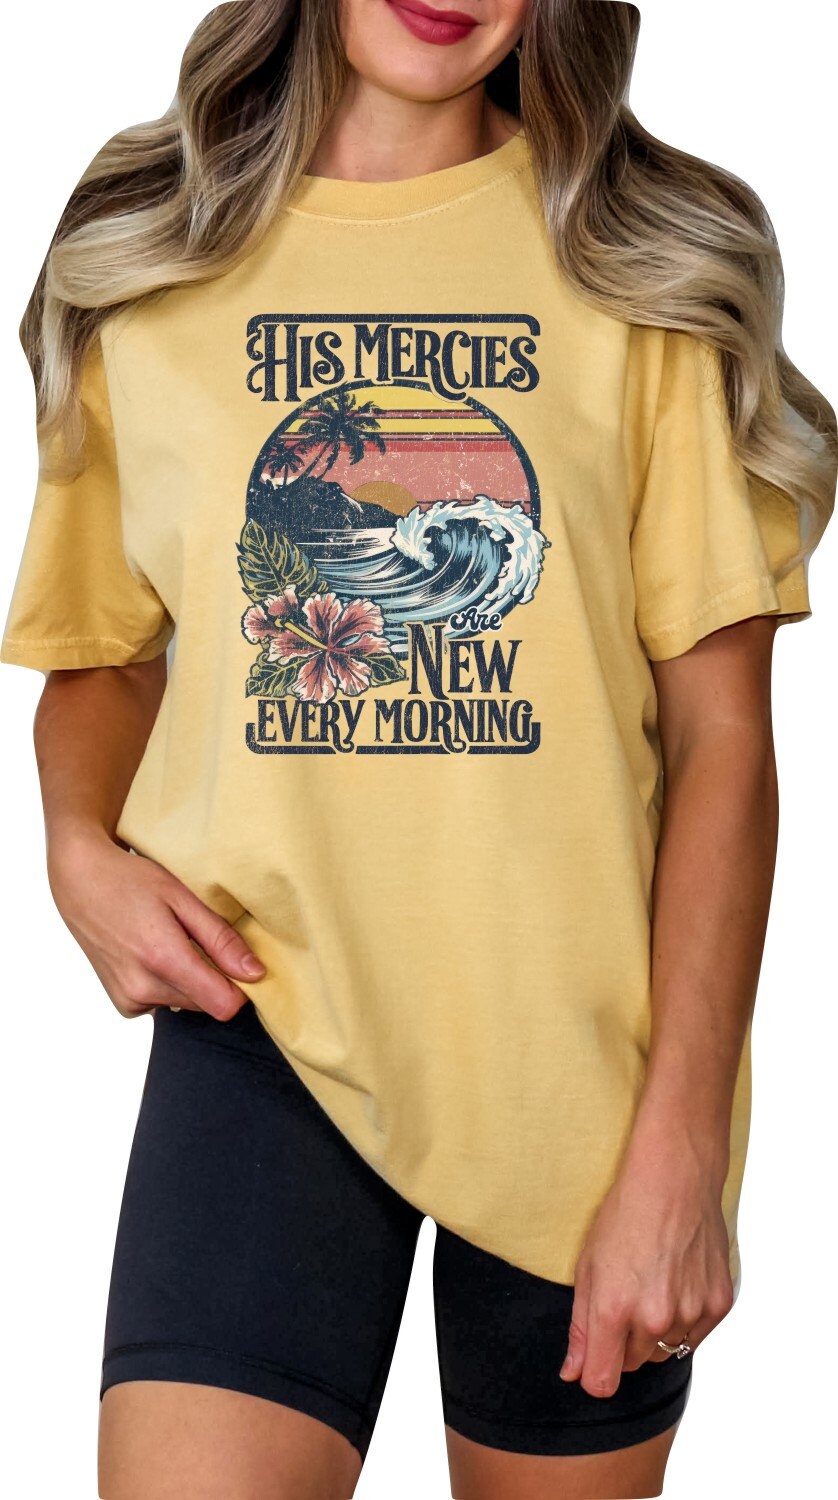 Christian Shirts Boho Christian Shirt Religious Tshirt Christian T Shirts Bible Verse Shirt His Mercies are New Every Morning Shirt